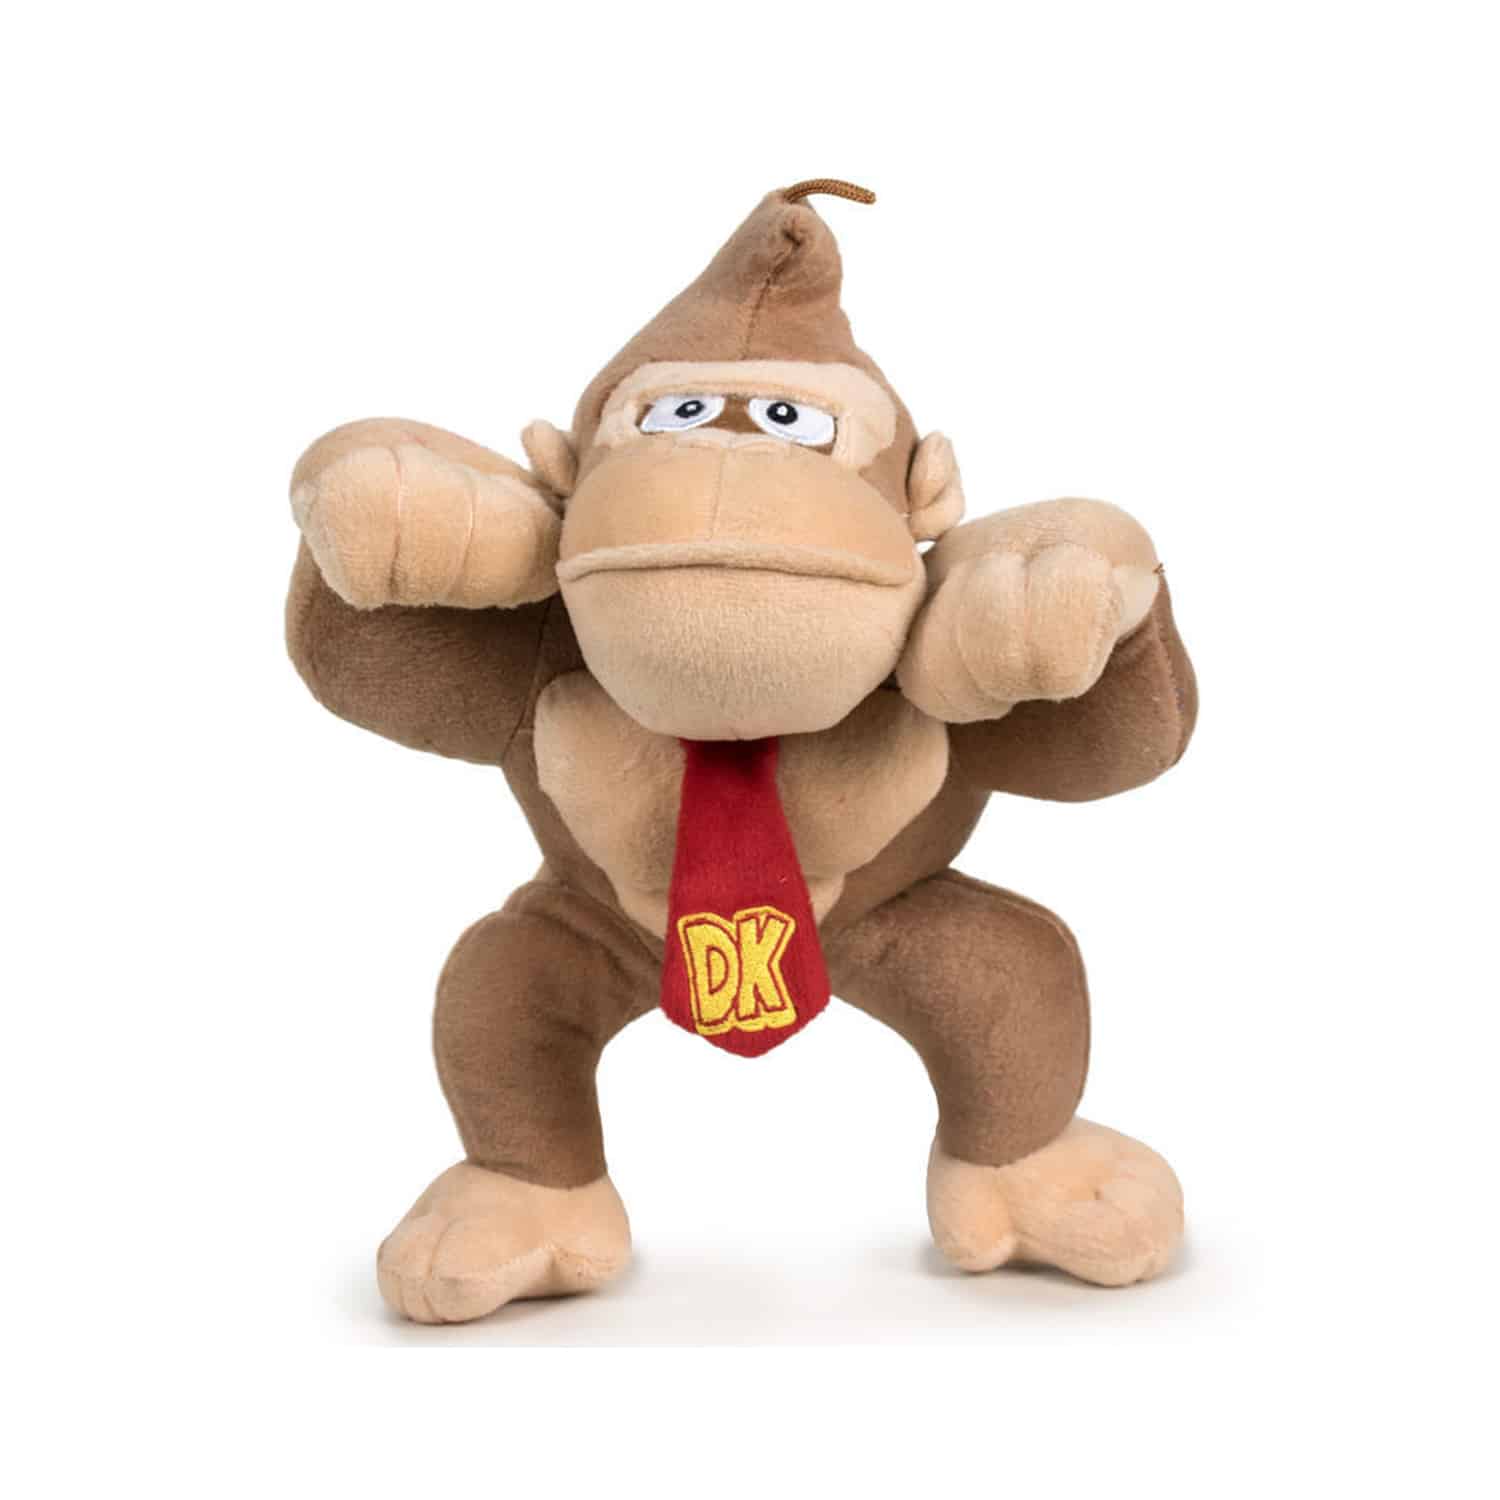 Donkey Kong - Donkey Kong Plush Toy